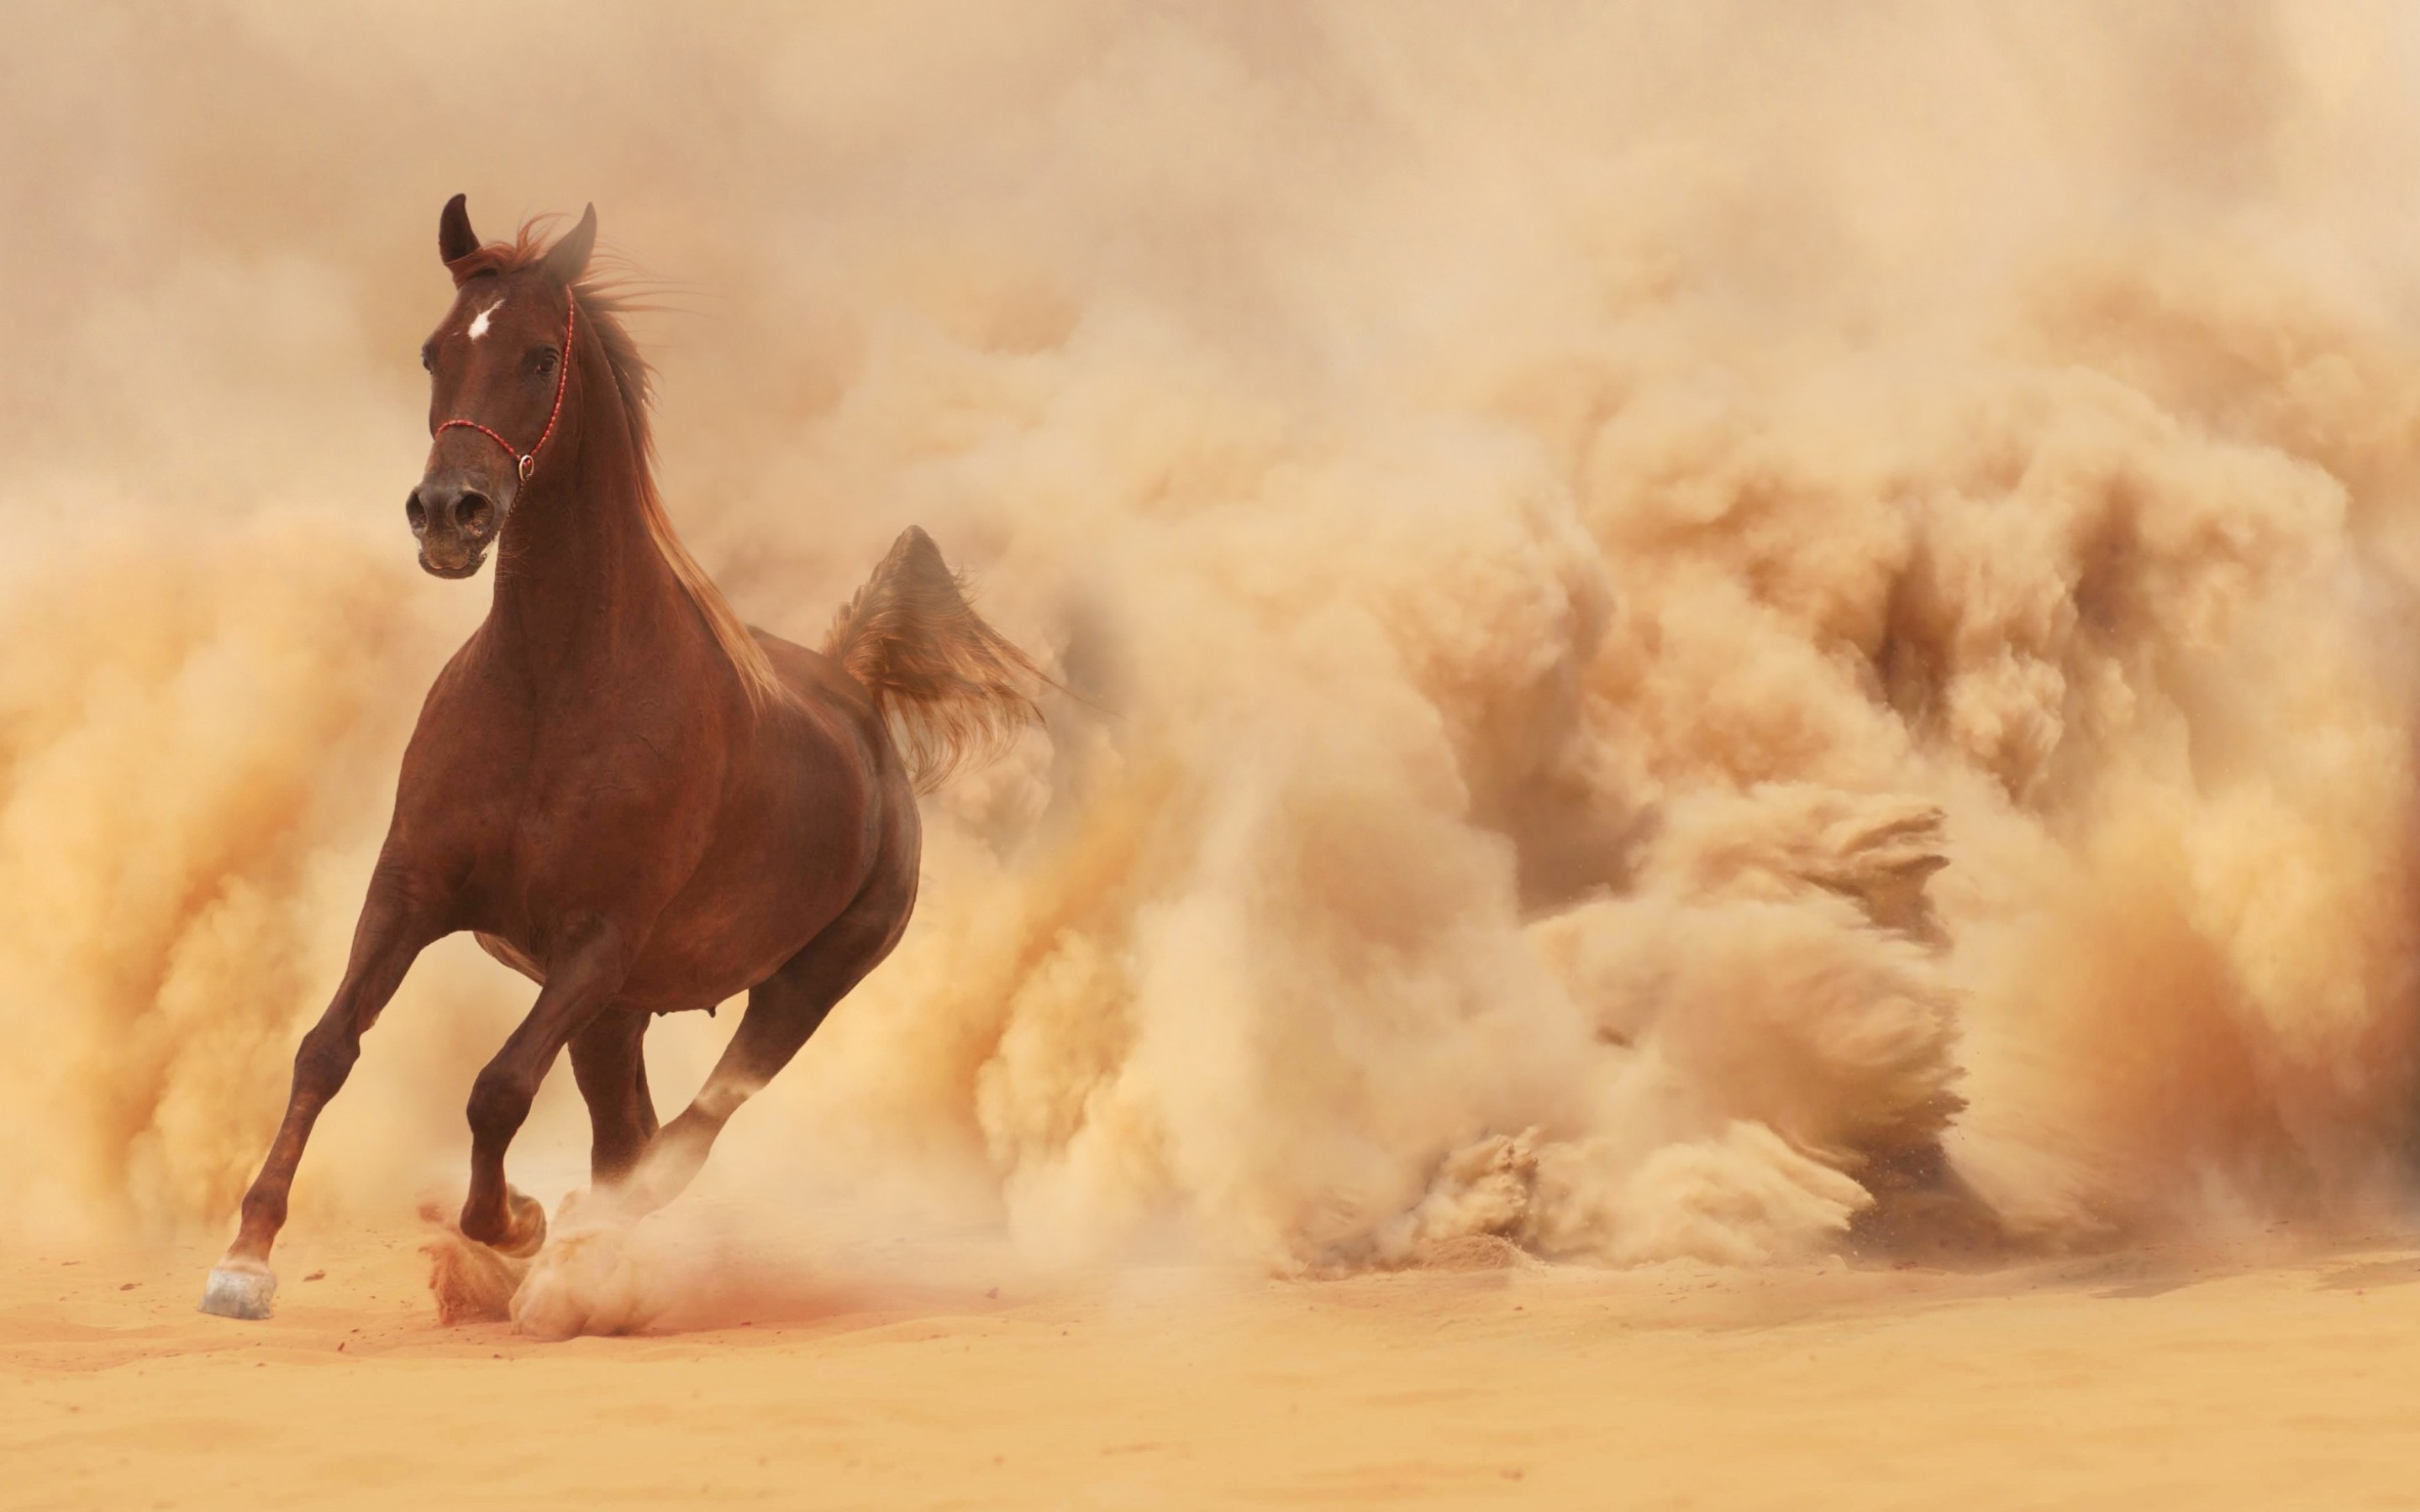 running, dust, animal, horse, dirt